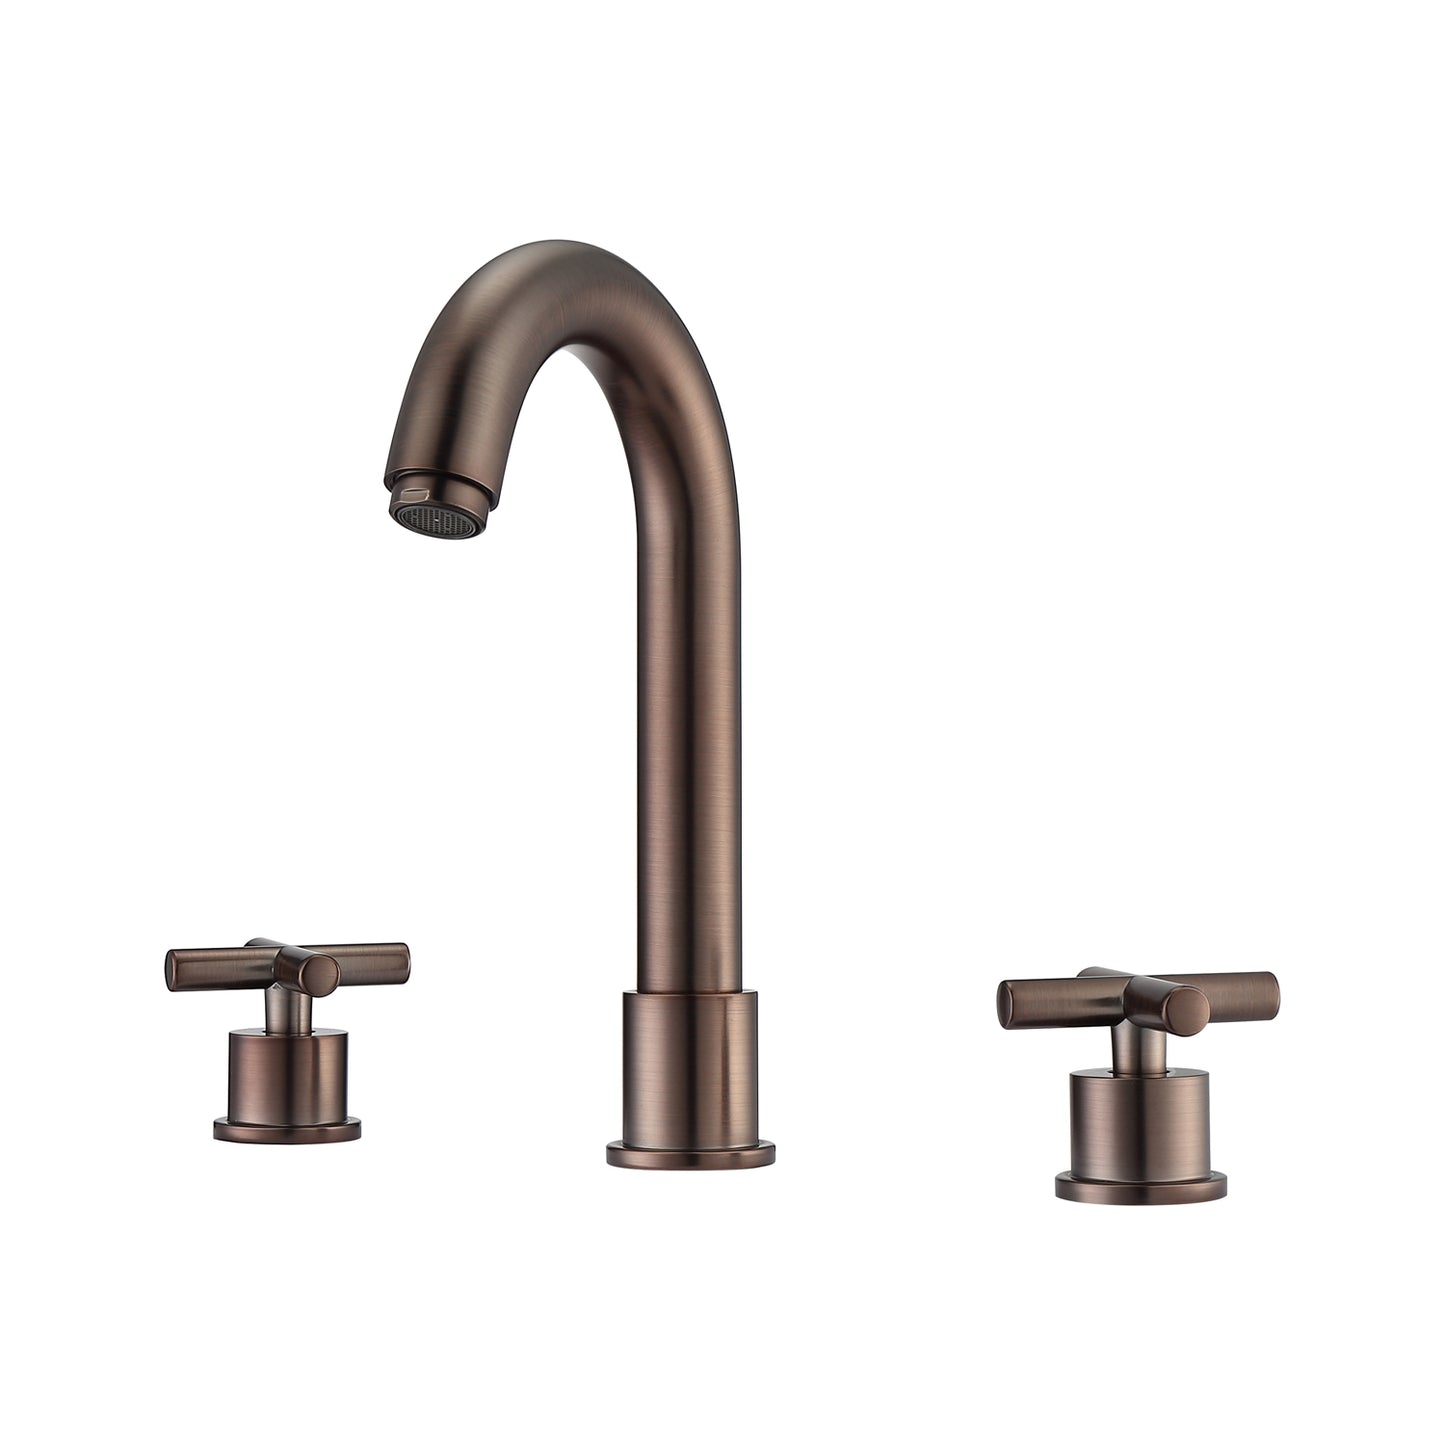 Conley 8" Widespread Oil Rubbed Bronze Bathroom Faucet with Metal Cross Handles